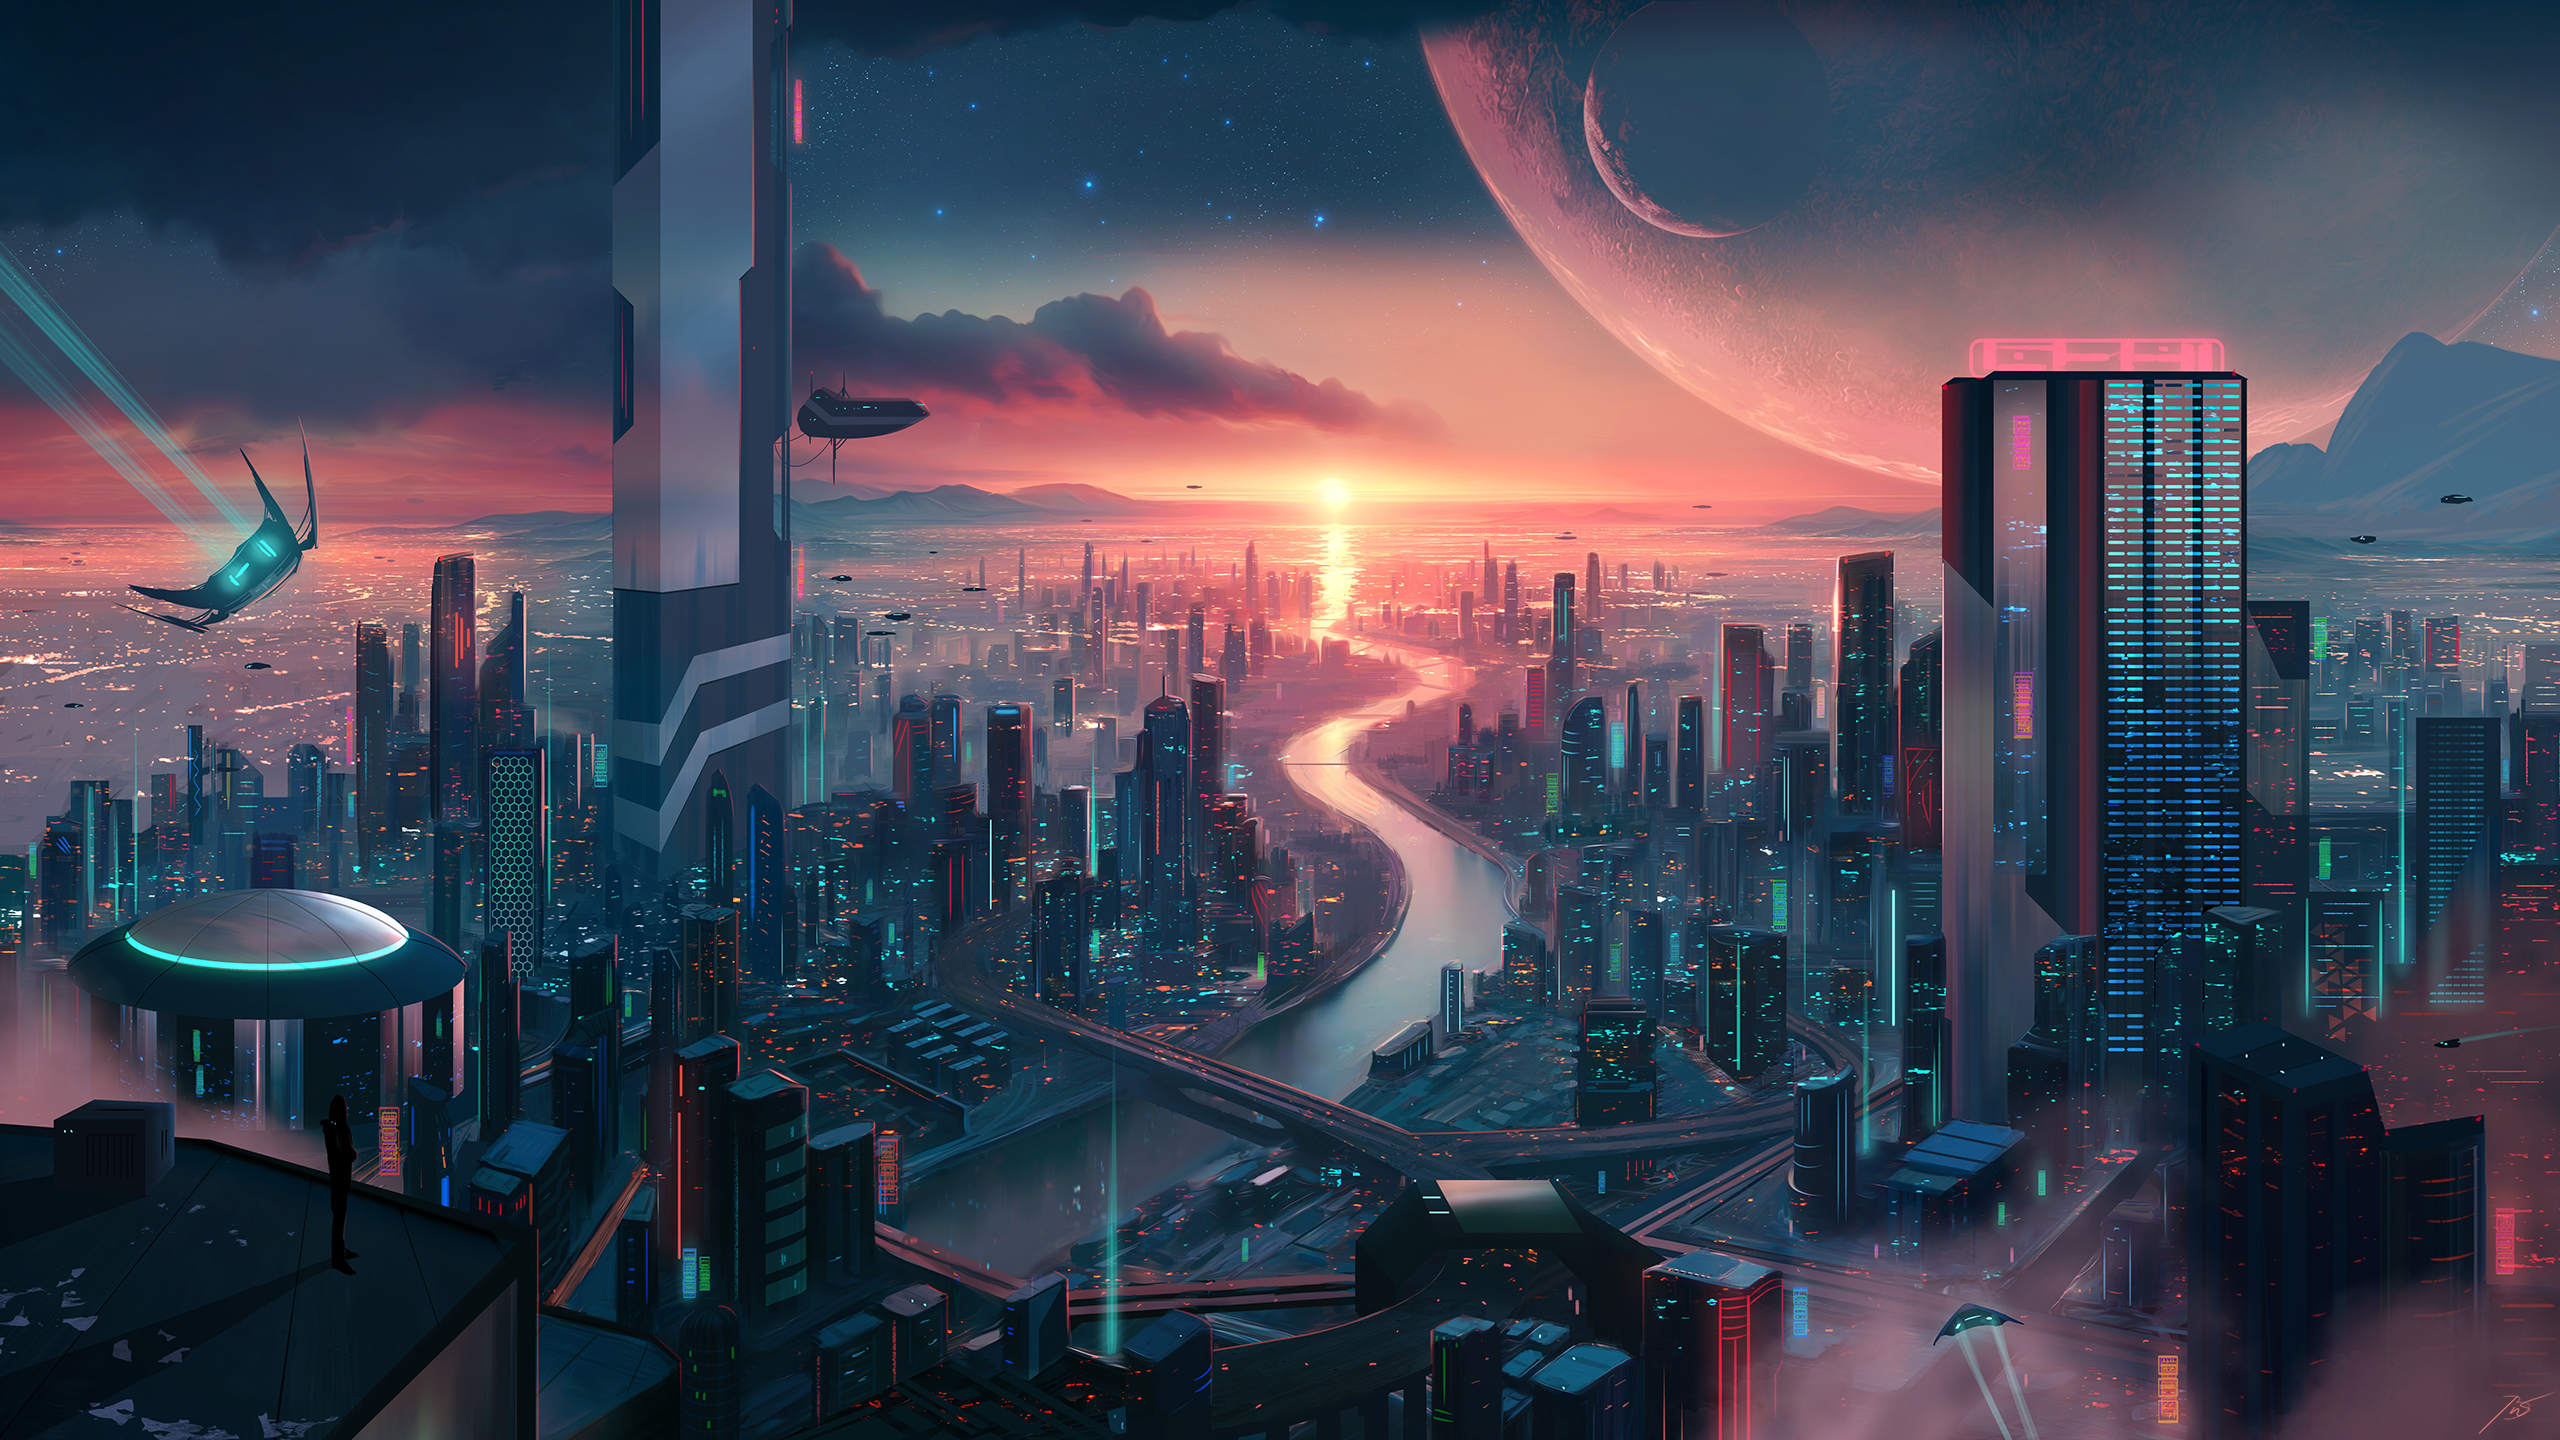 JoeyJazz Cityscape Futuristic Digital Art Cyberpunk Spaceship Skyscraper Planet River Stars Clouds R 2560x1440